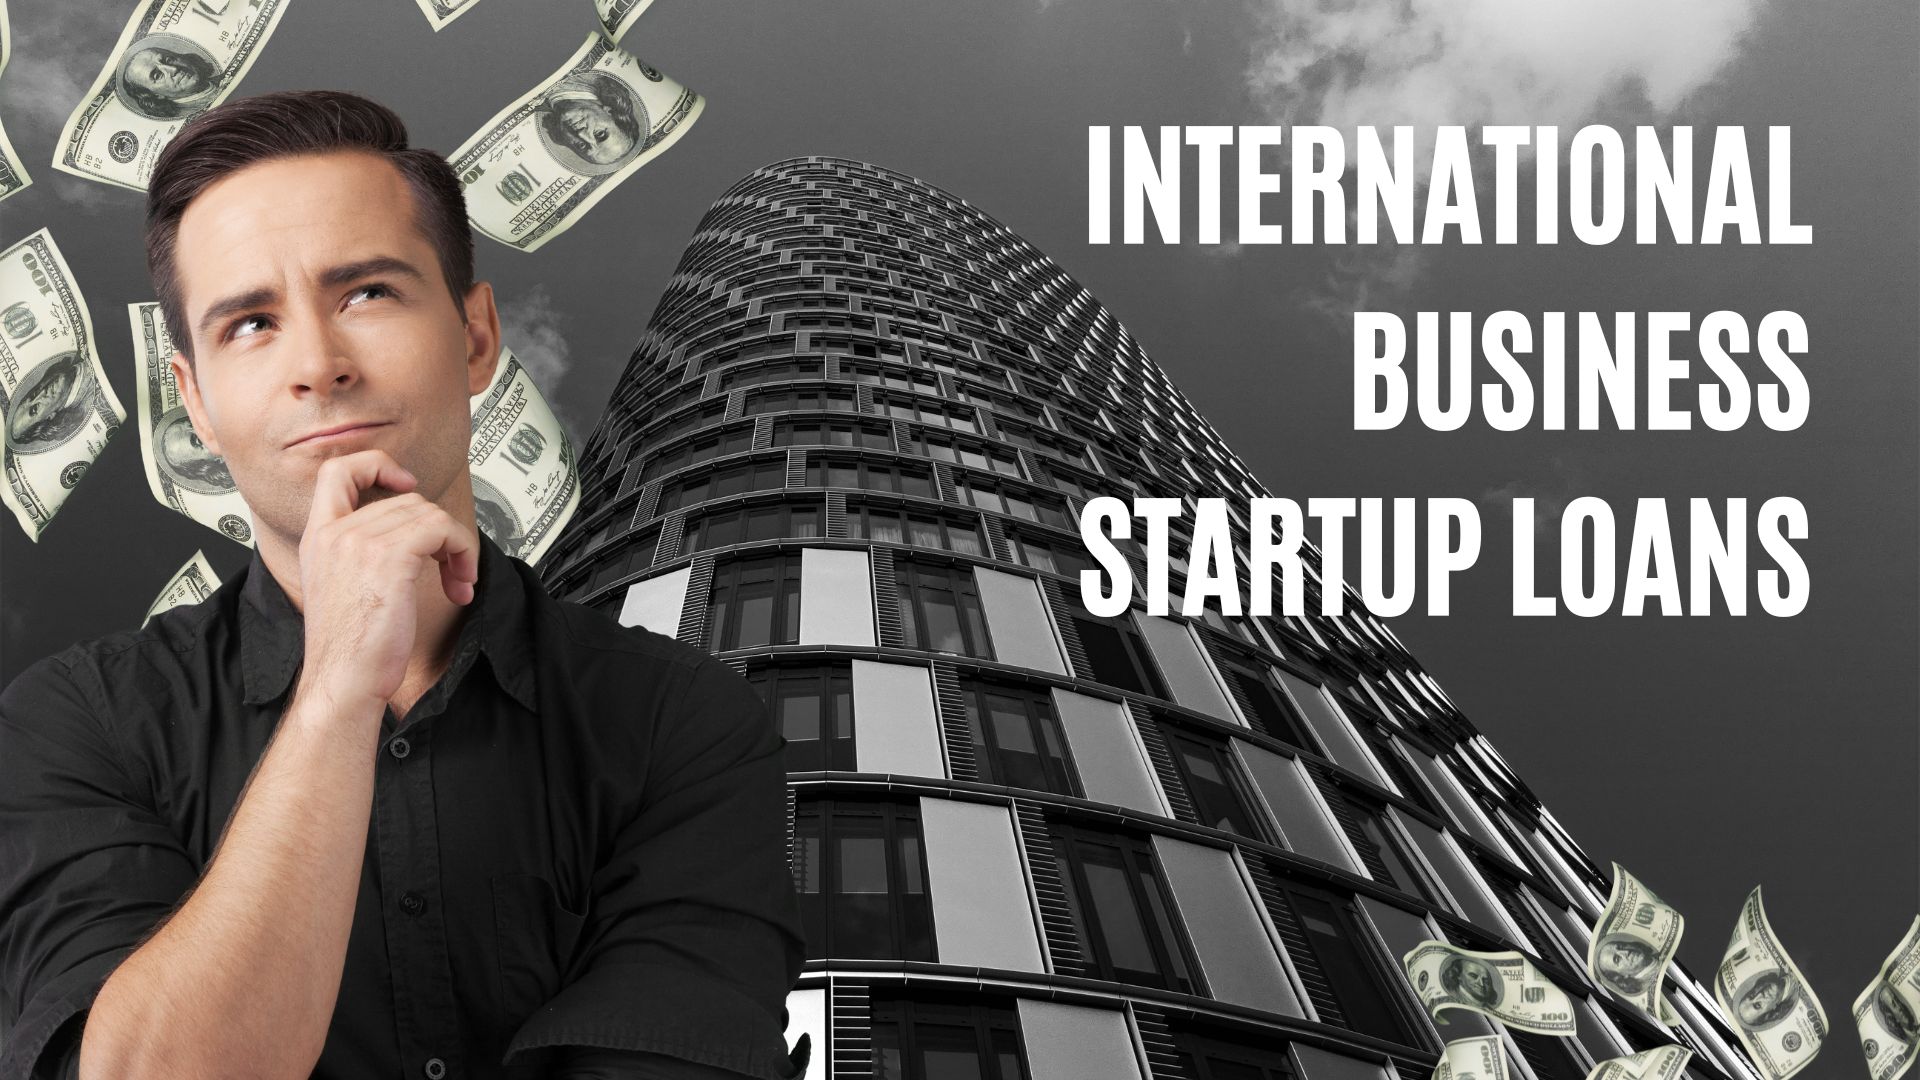 International Business Startup Loans